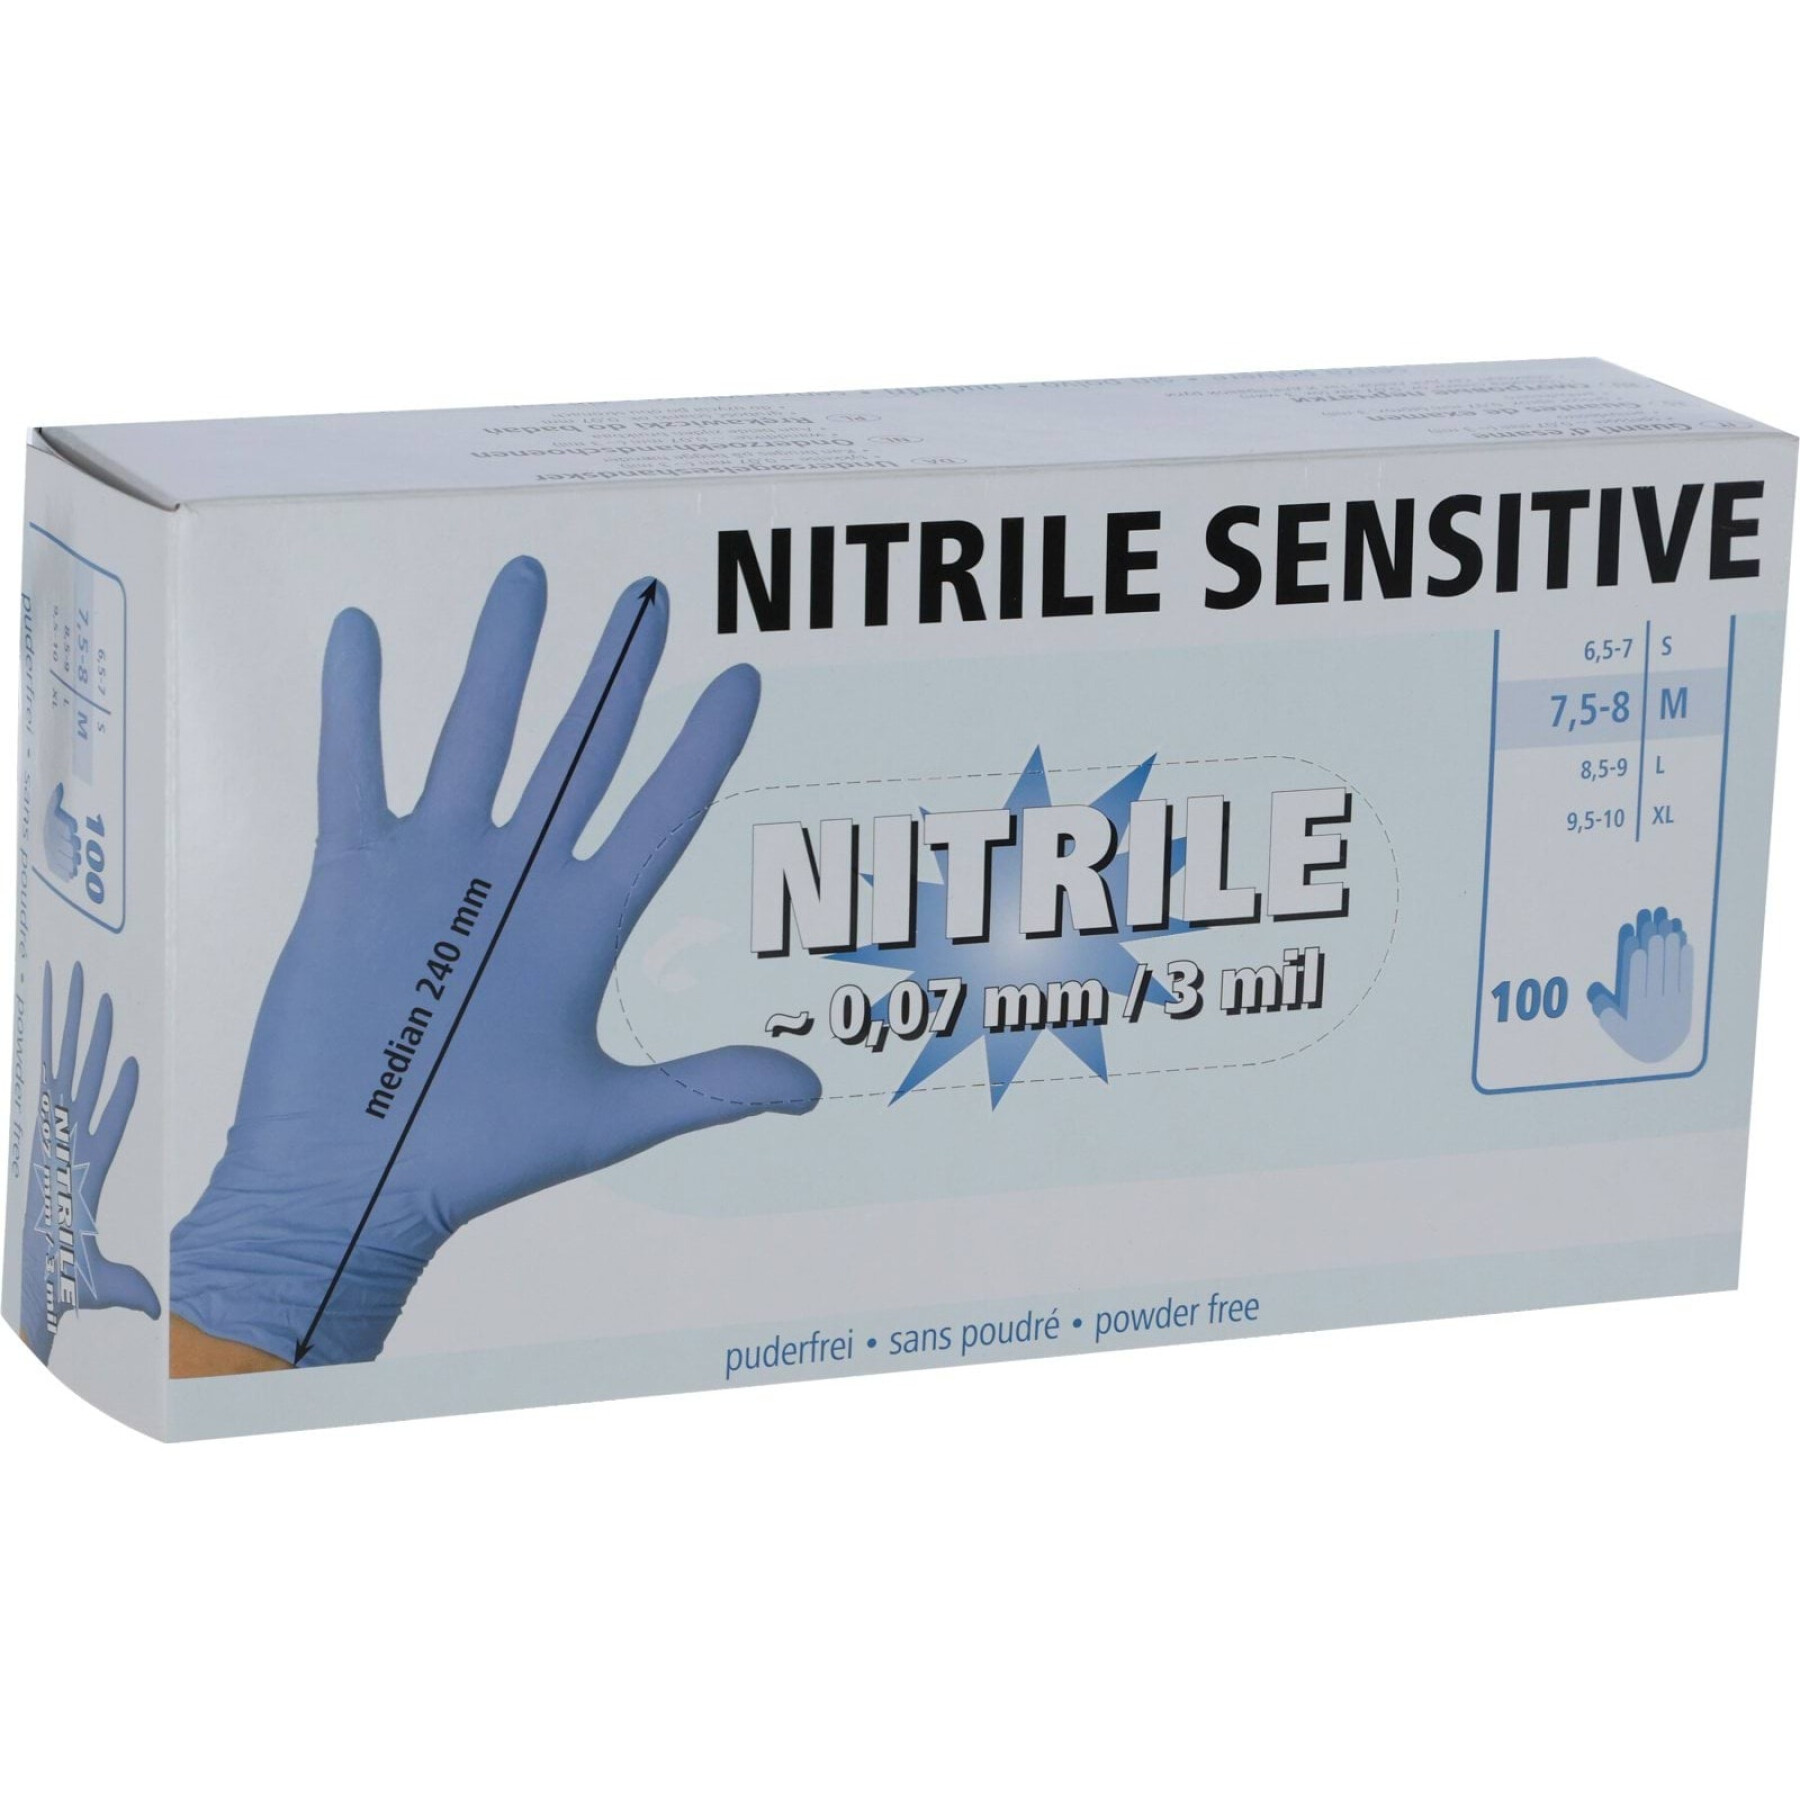 Einweghandschuhe aus Nitril Kerbl Sensitive (x50)